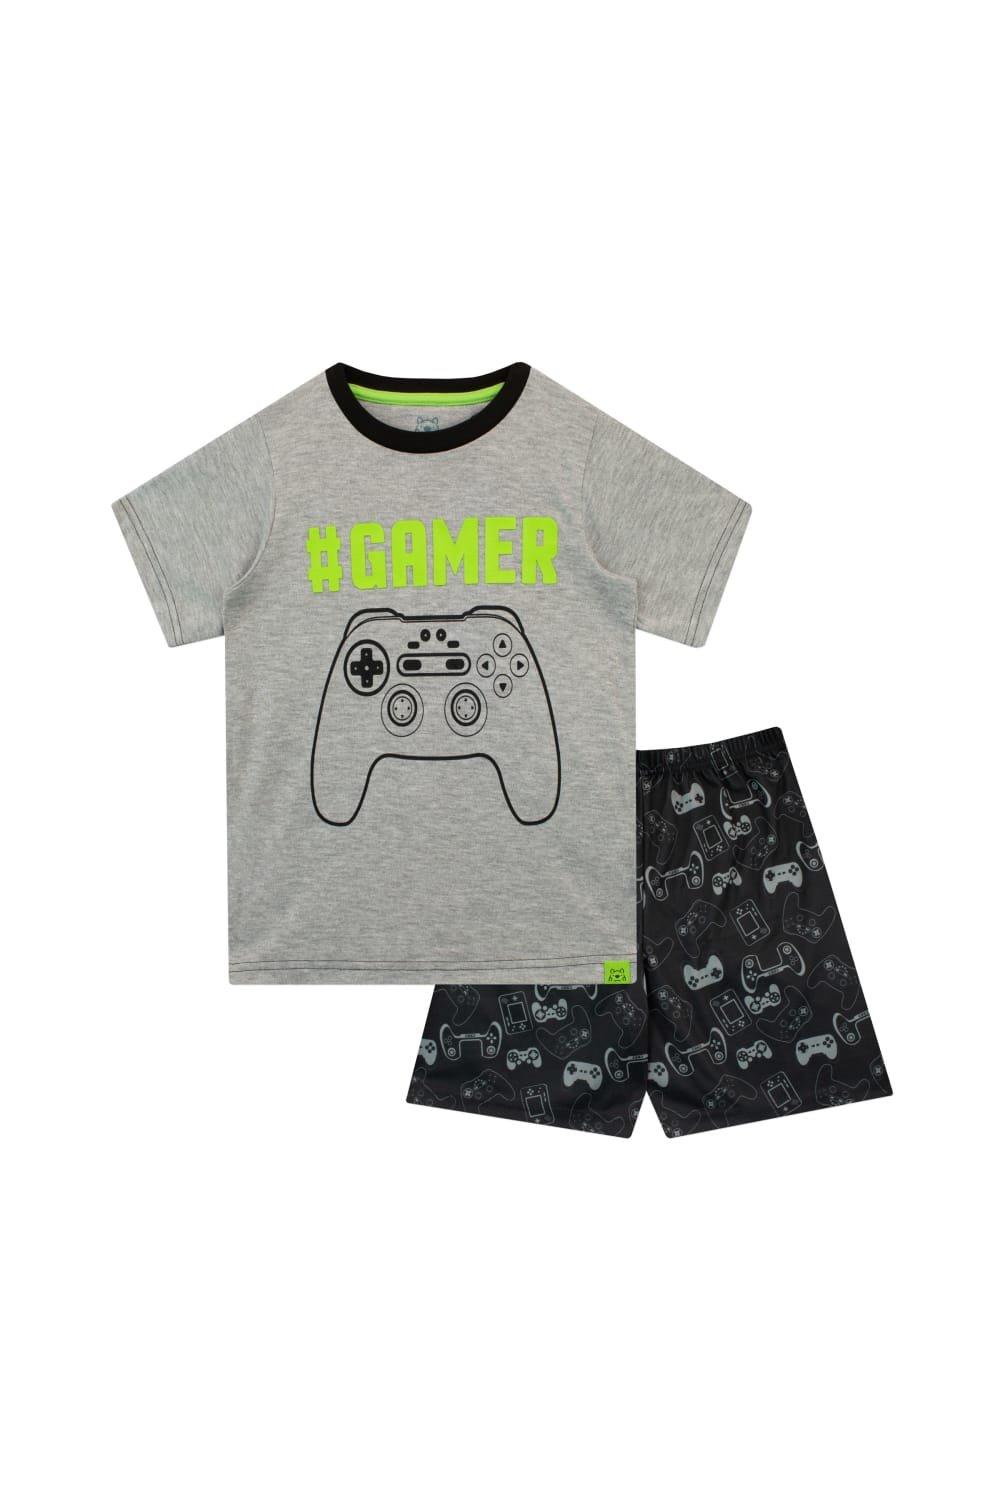 Gamer Short Pyjamas